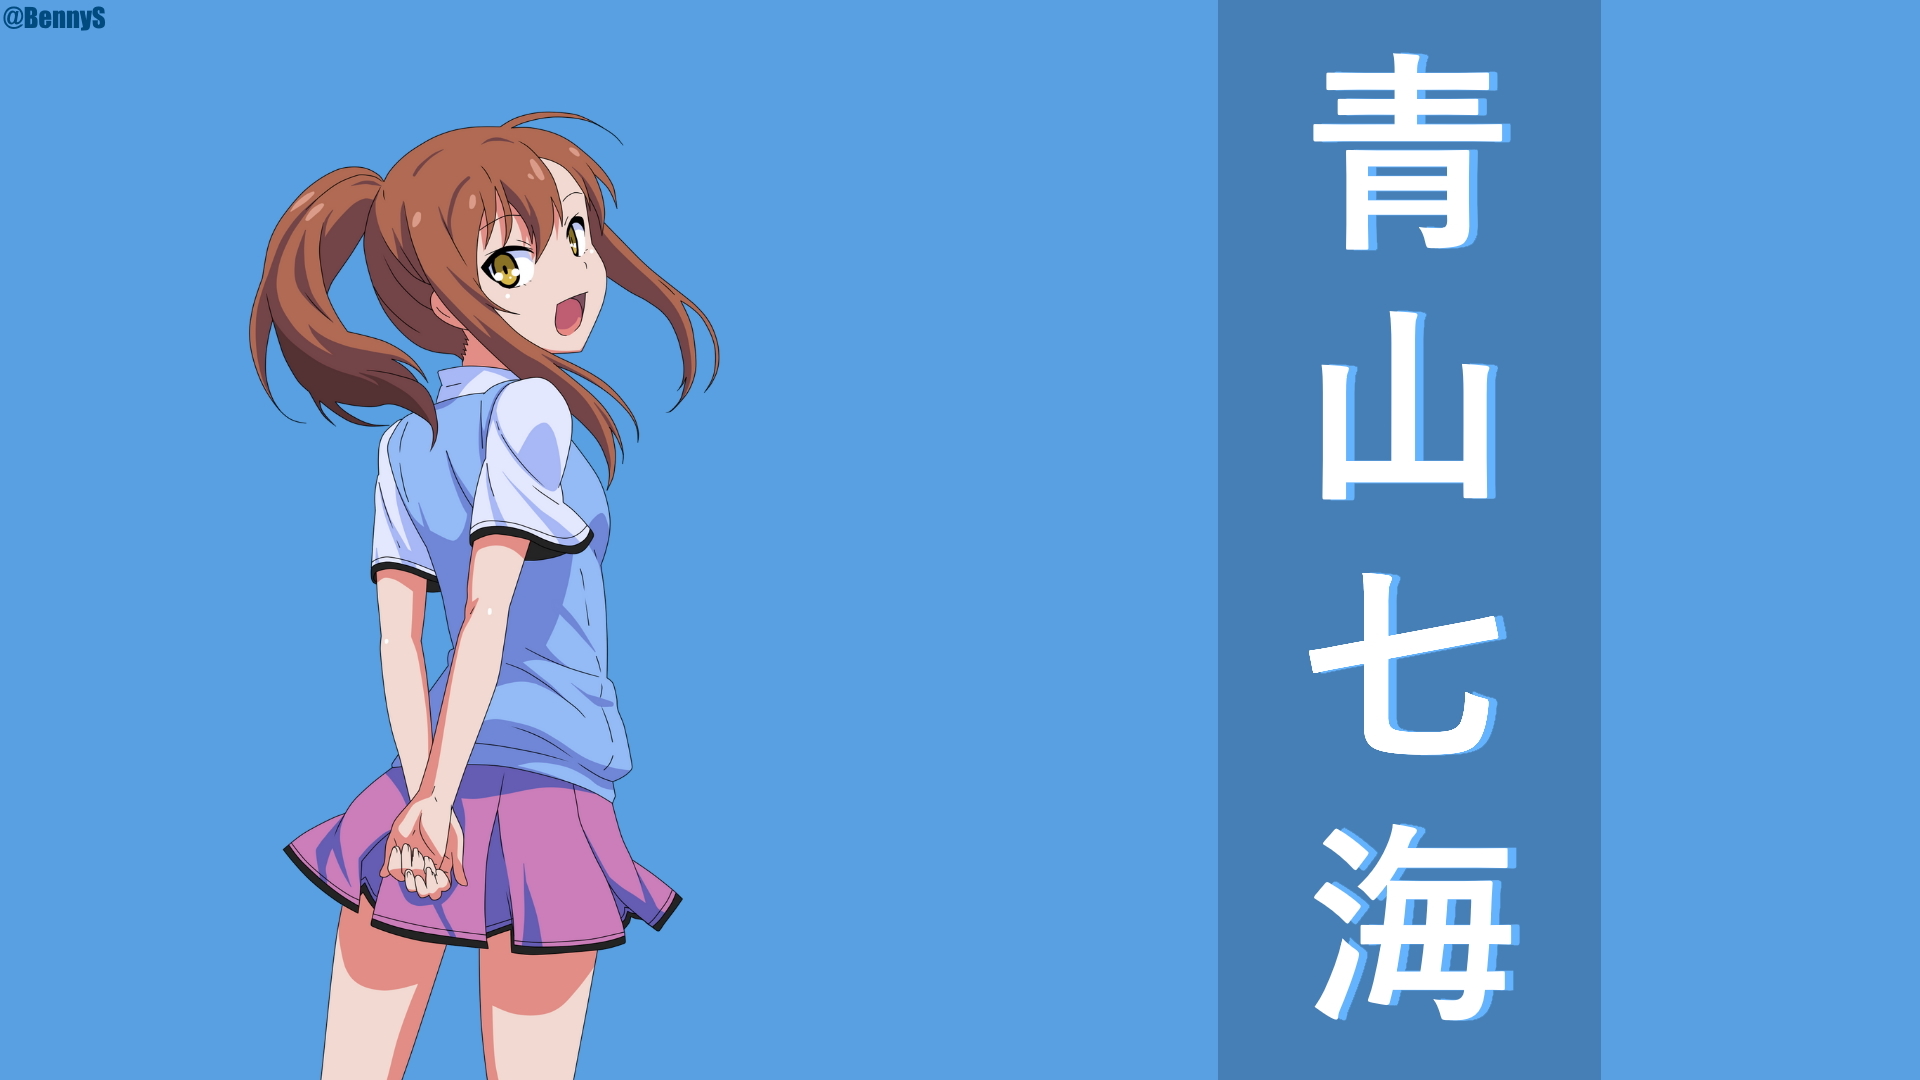 Anime Kanji Stock Vector Illustration and Royalty Free Anime Kanji Clipart